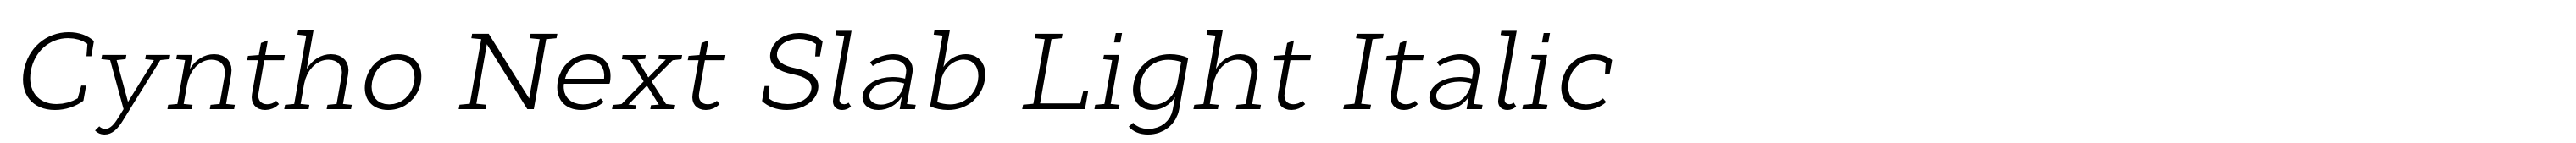 Cyntho Next Slab Light Italic